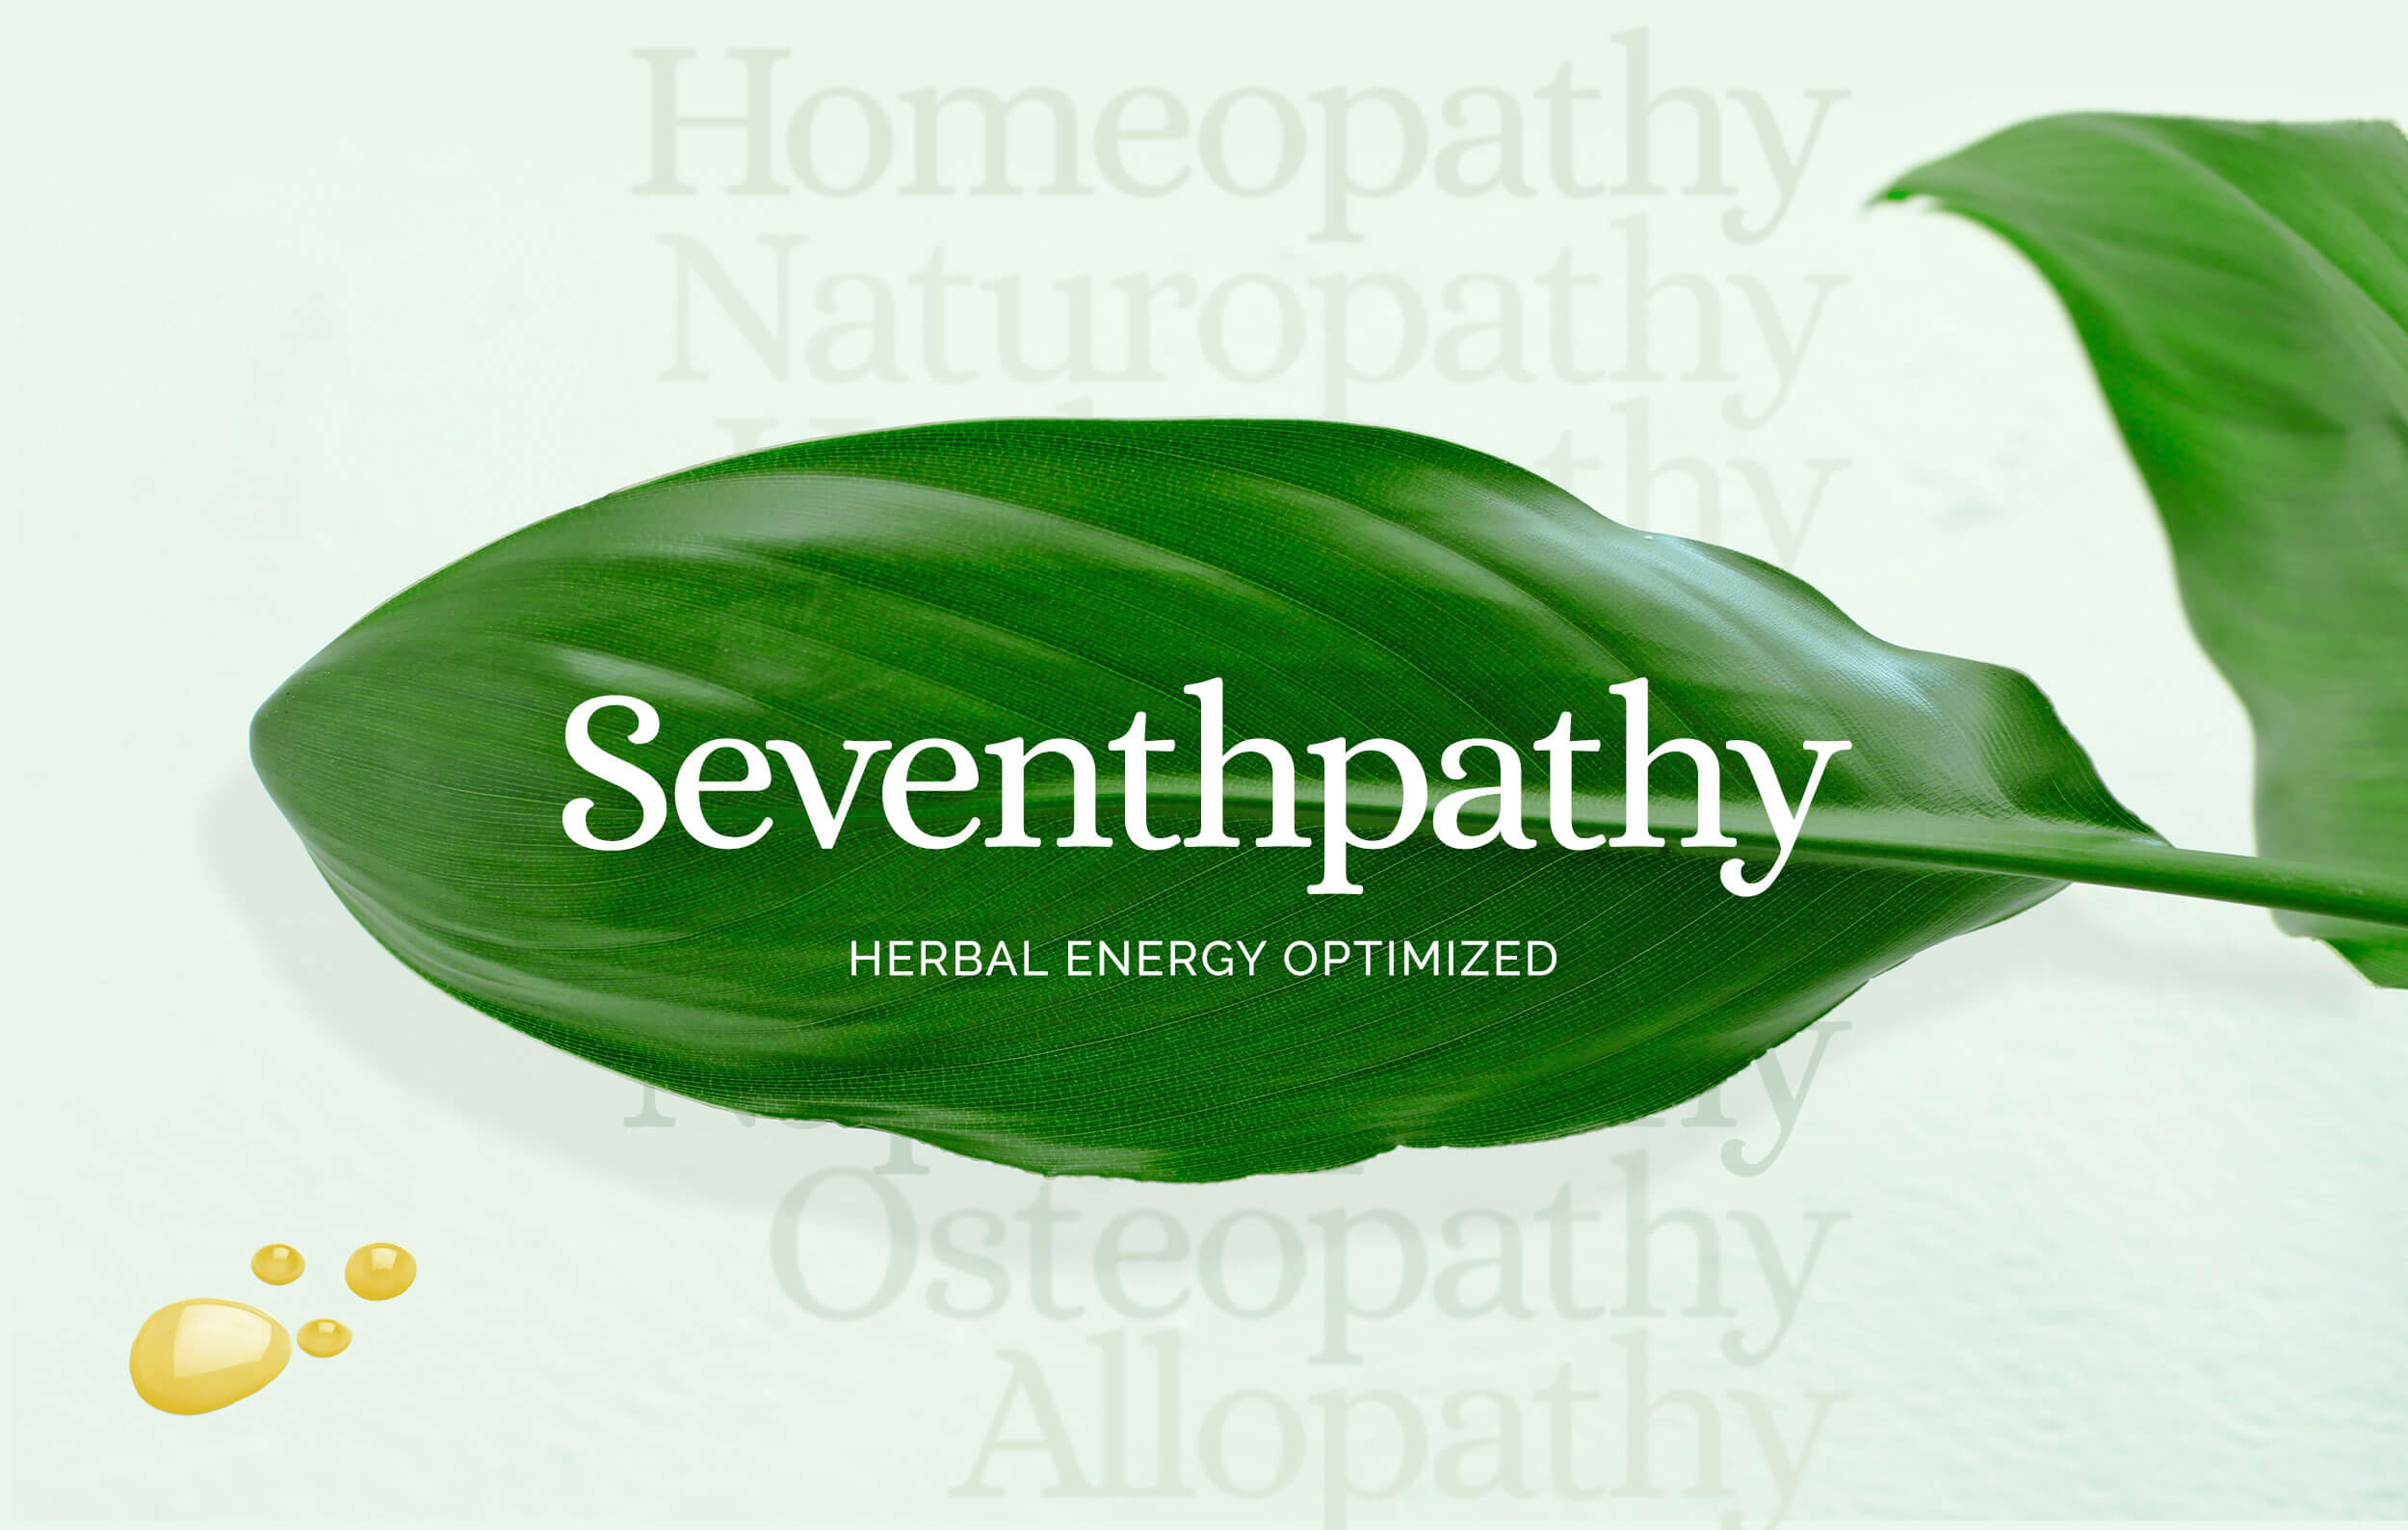 Seventh-Pathy-Leaf-brand-name-design-by-Artisticodopeo-Designz.jpg Image